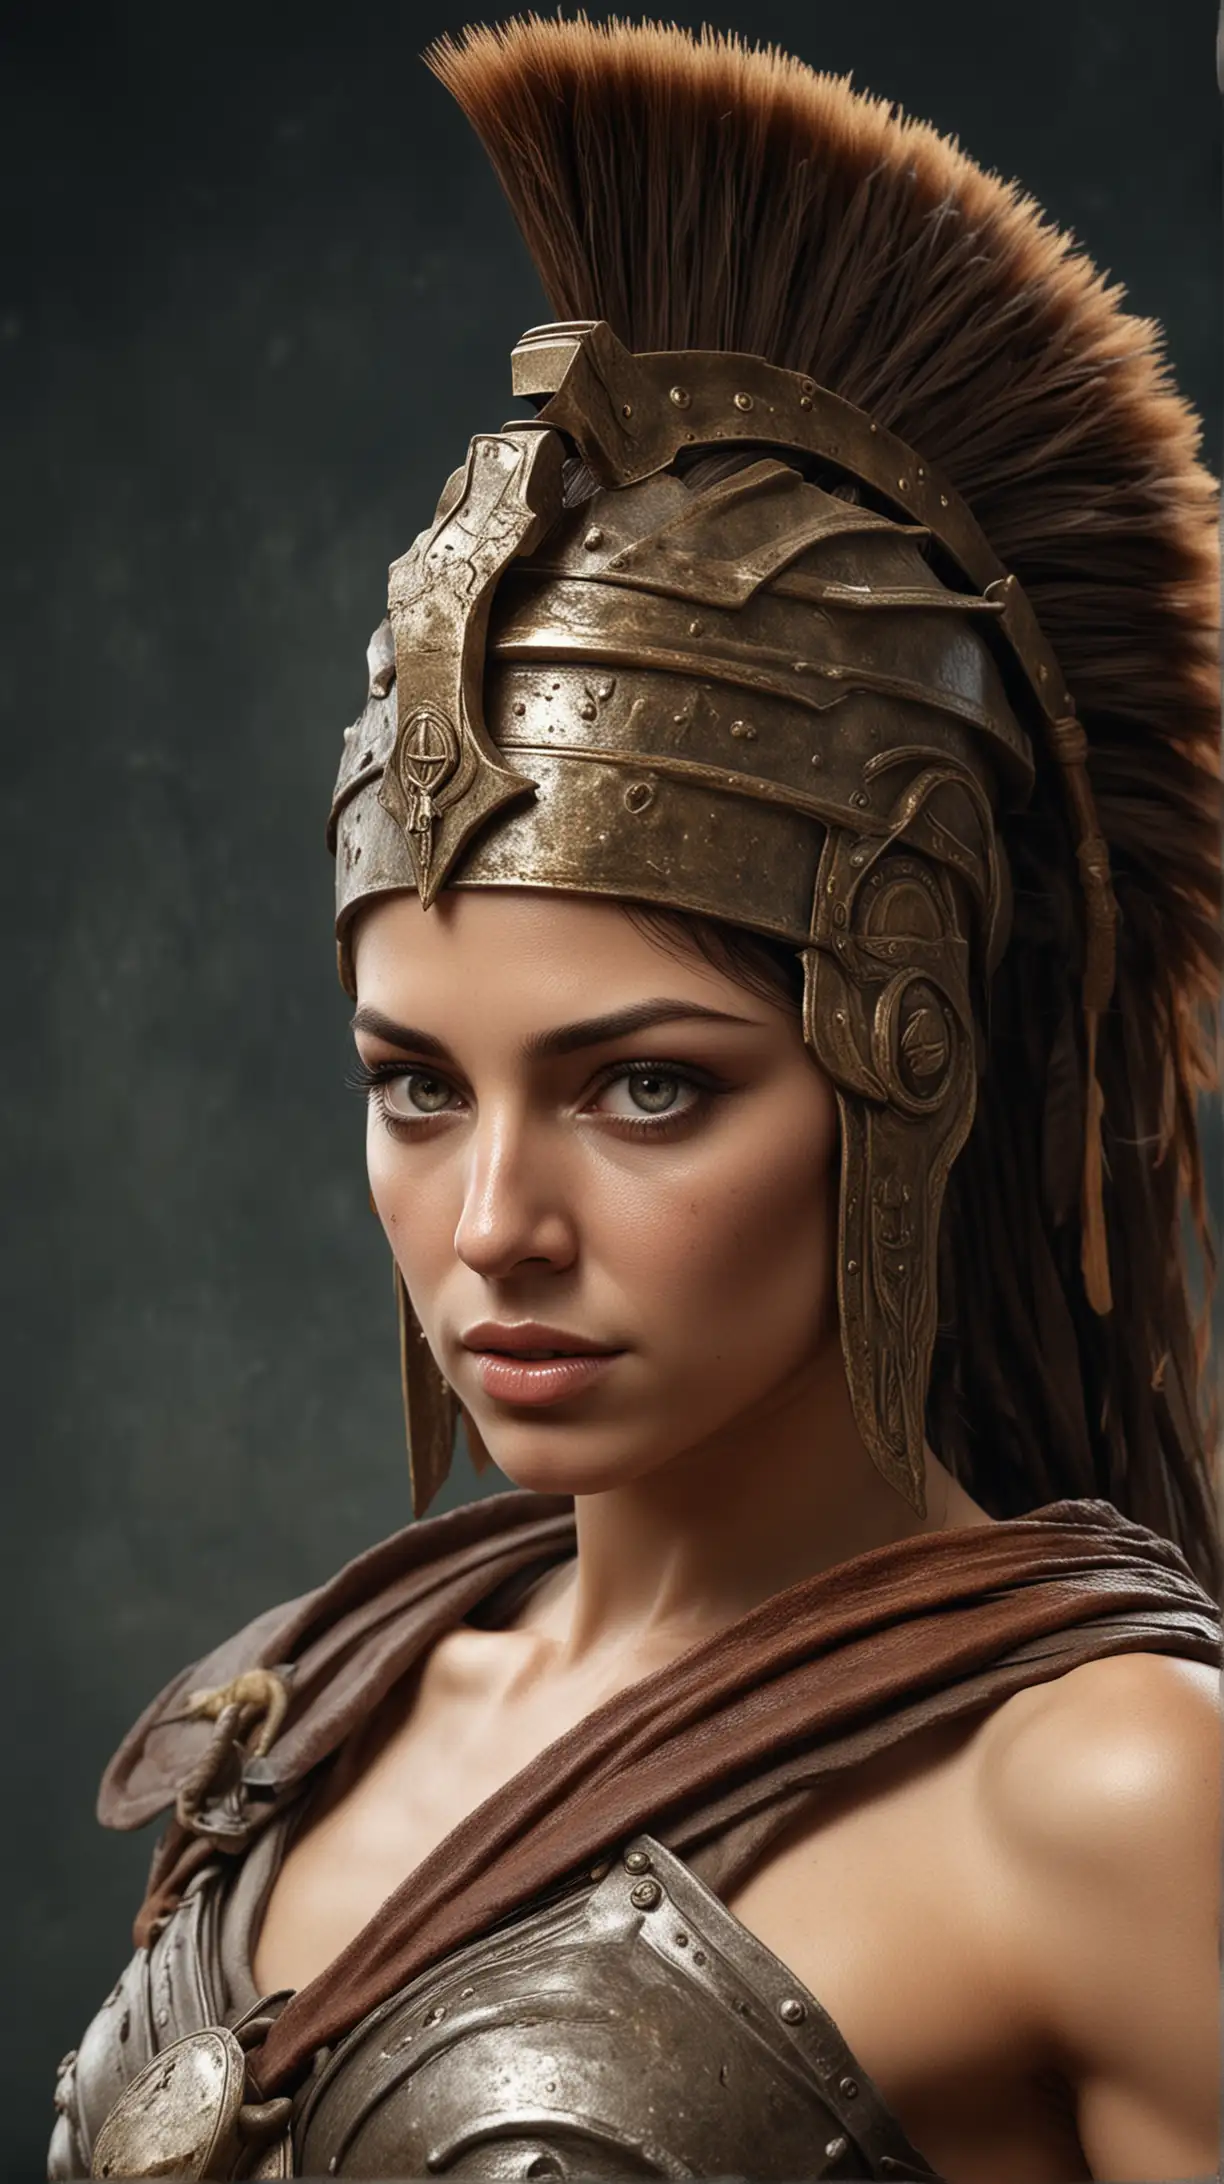 Hyper Realistic Portrait of an Ancient Spartan Beauty